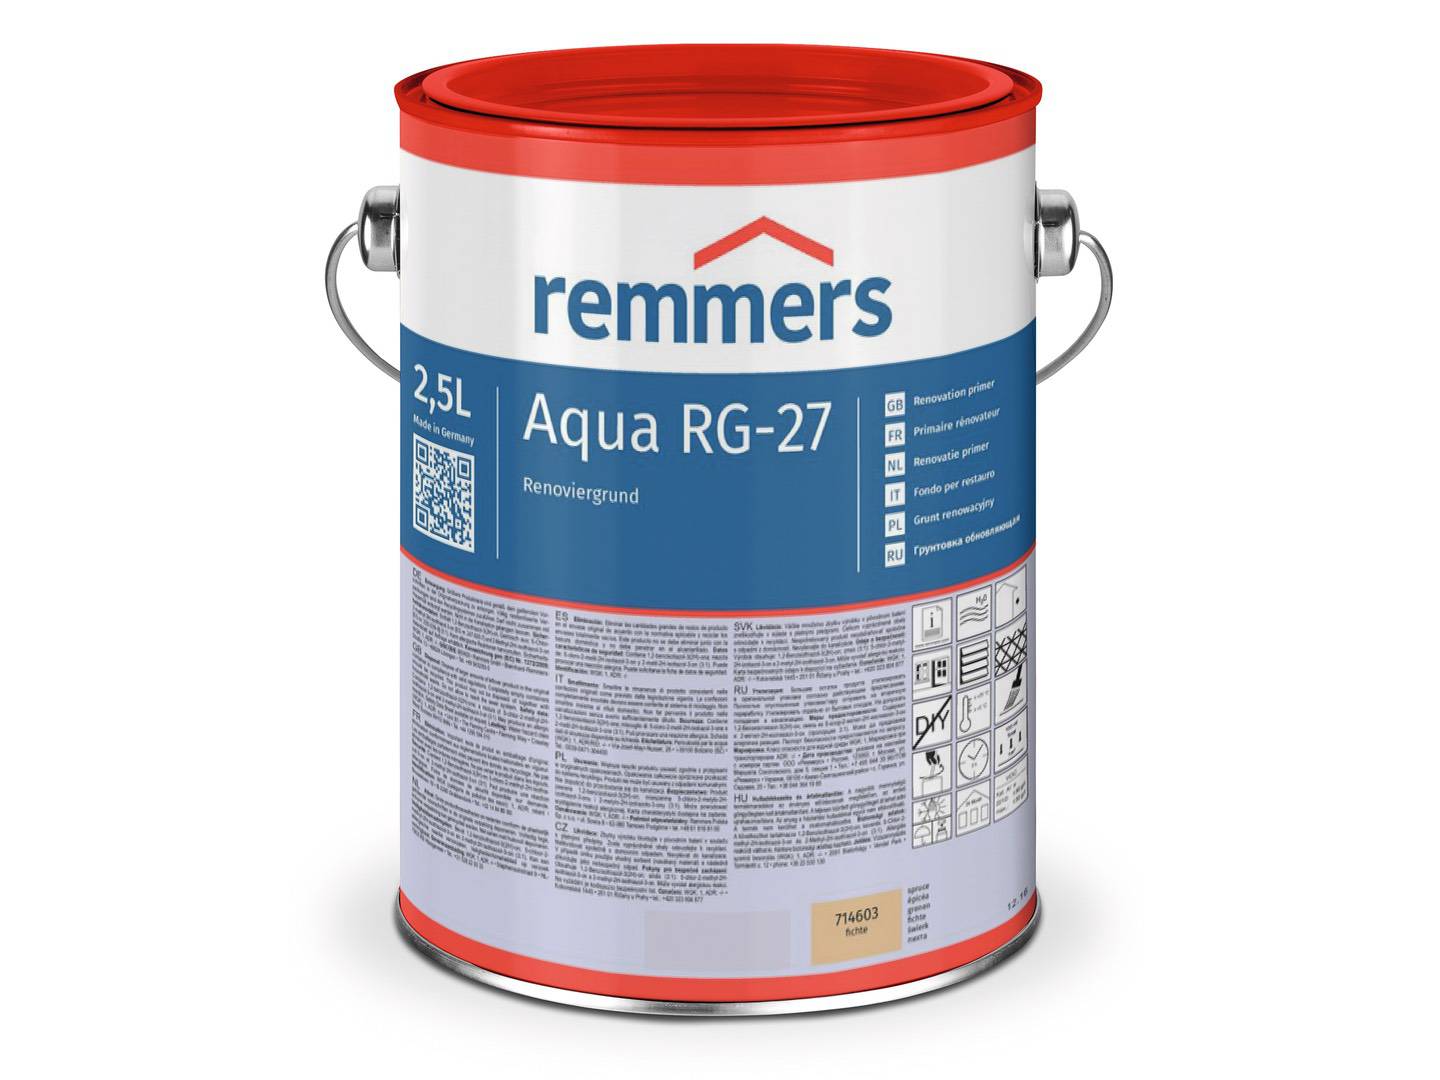 REMMERS Aqua RG-27-Renoviergrund